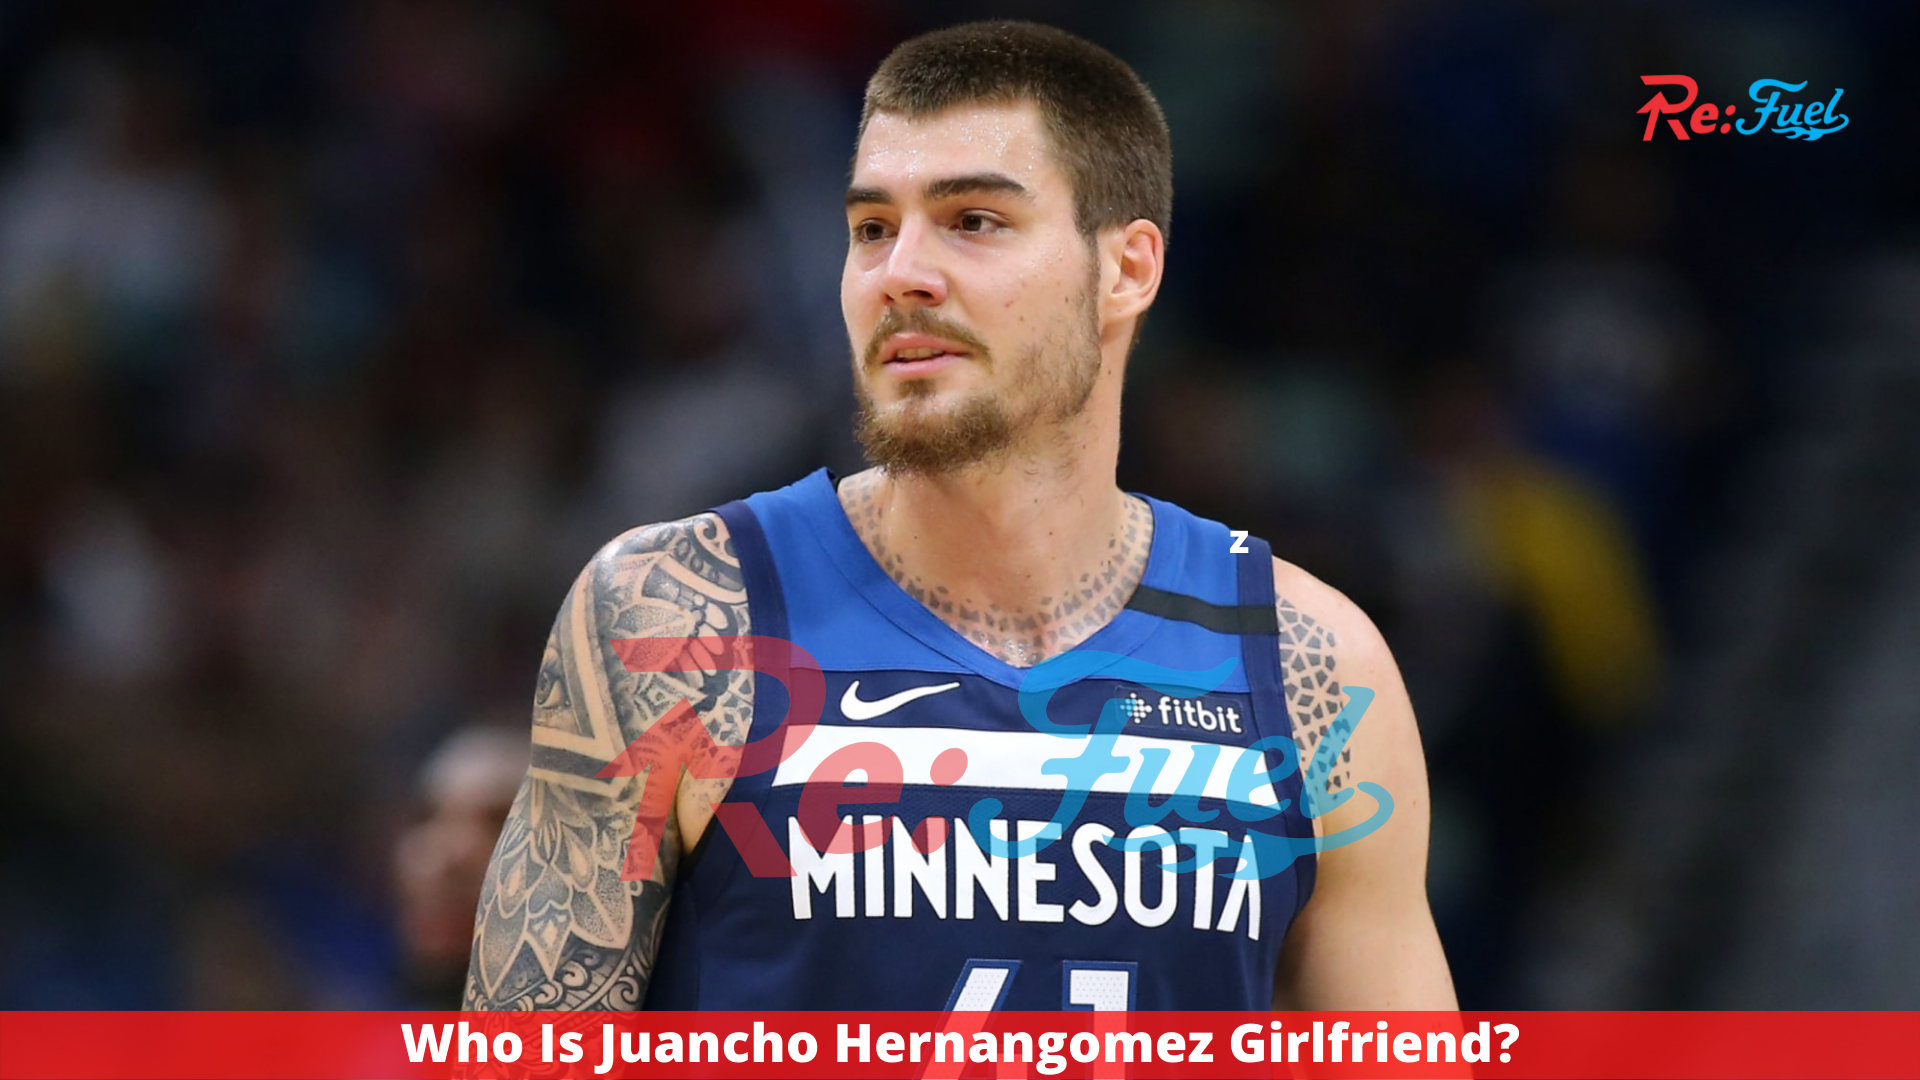 Who Is Juancho Hernangomez Girlfriend?